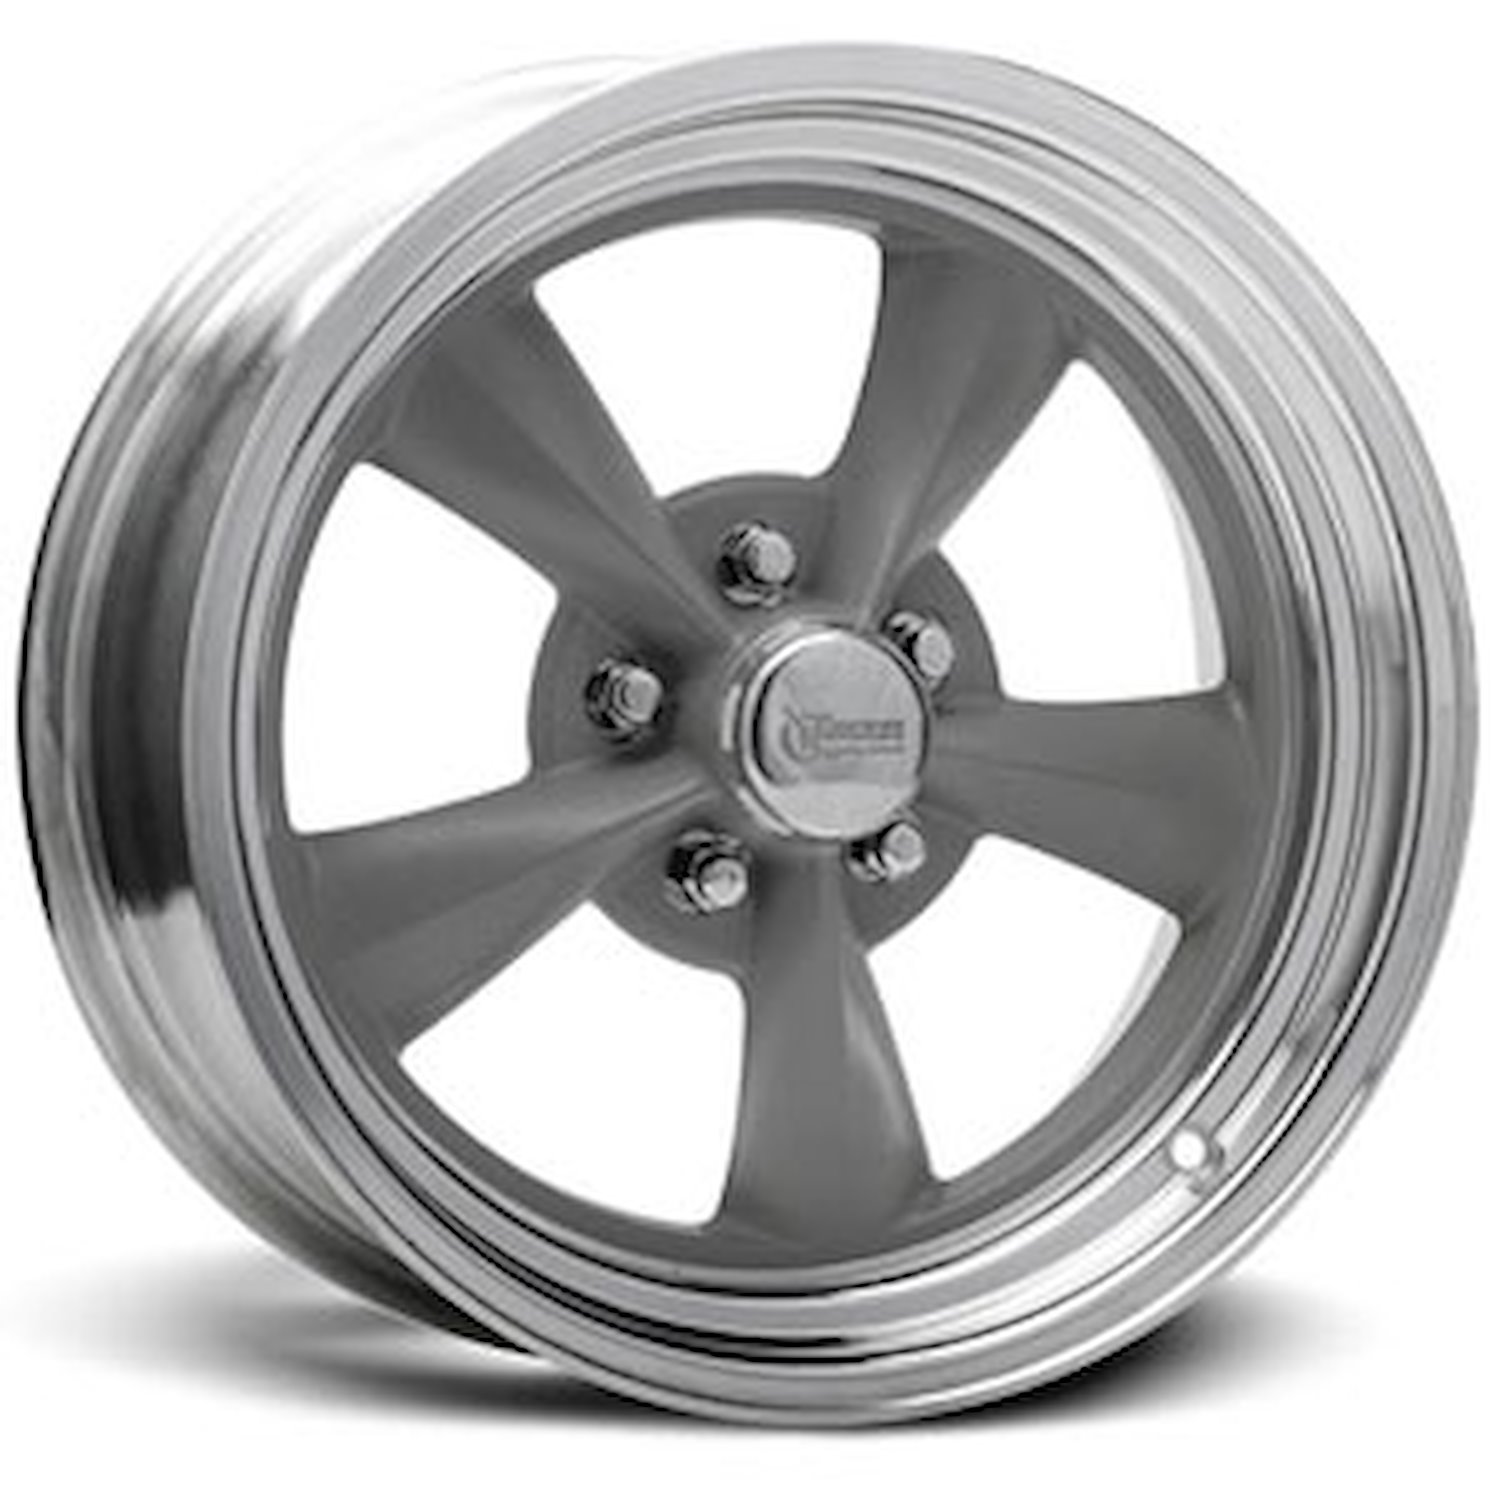 Fuel Wheel - Gray Size: 15" x 4"